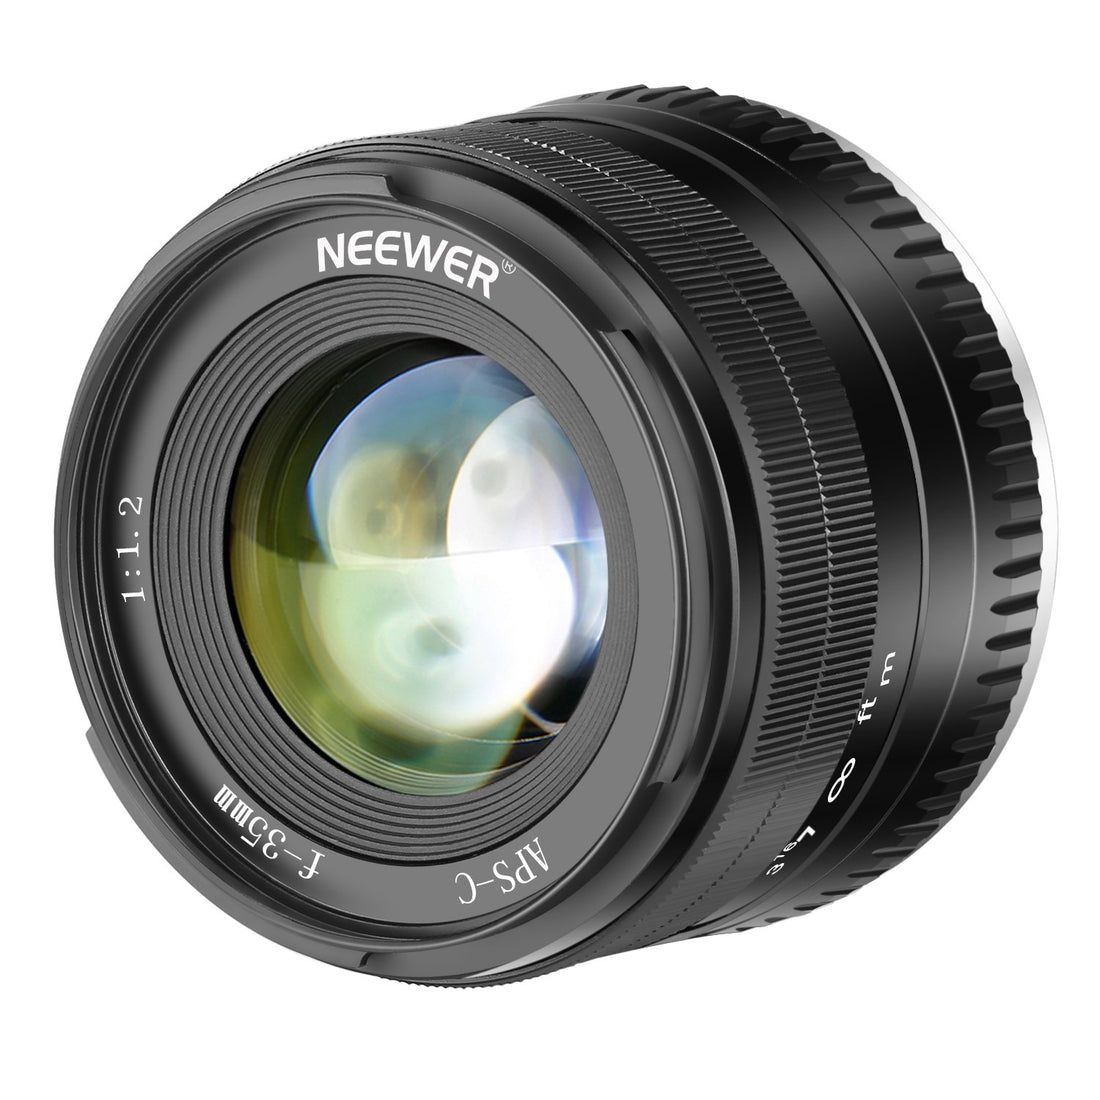 Neewer 35mm F1.2 Large Aperture Prime APS-C Aluminum Lens for Fuji X Mount Mirrorless Cameras X-A1 X-A10 X-A2 X-A3 X-at X-M1 X-M2 X-T1 X-T10 X-T2 X-T20 X-Pro1 X-Pro2 X-E1 X-E2 X-E2s